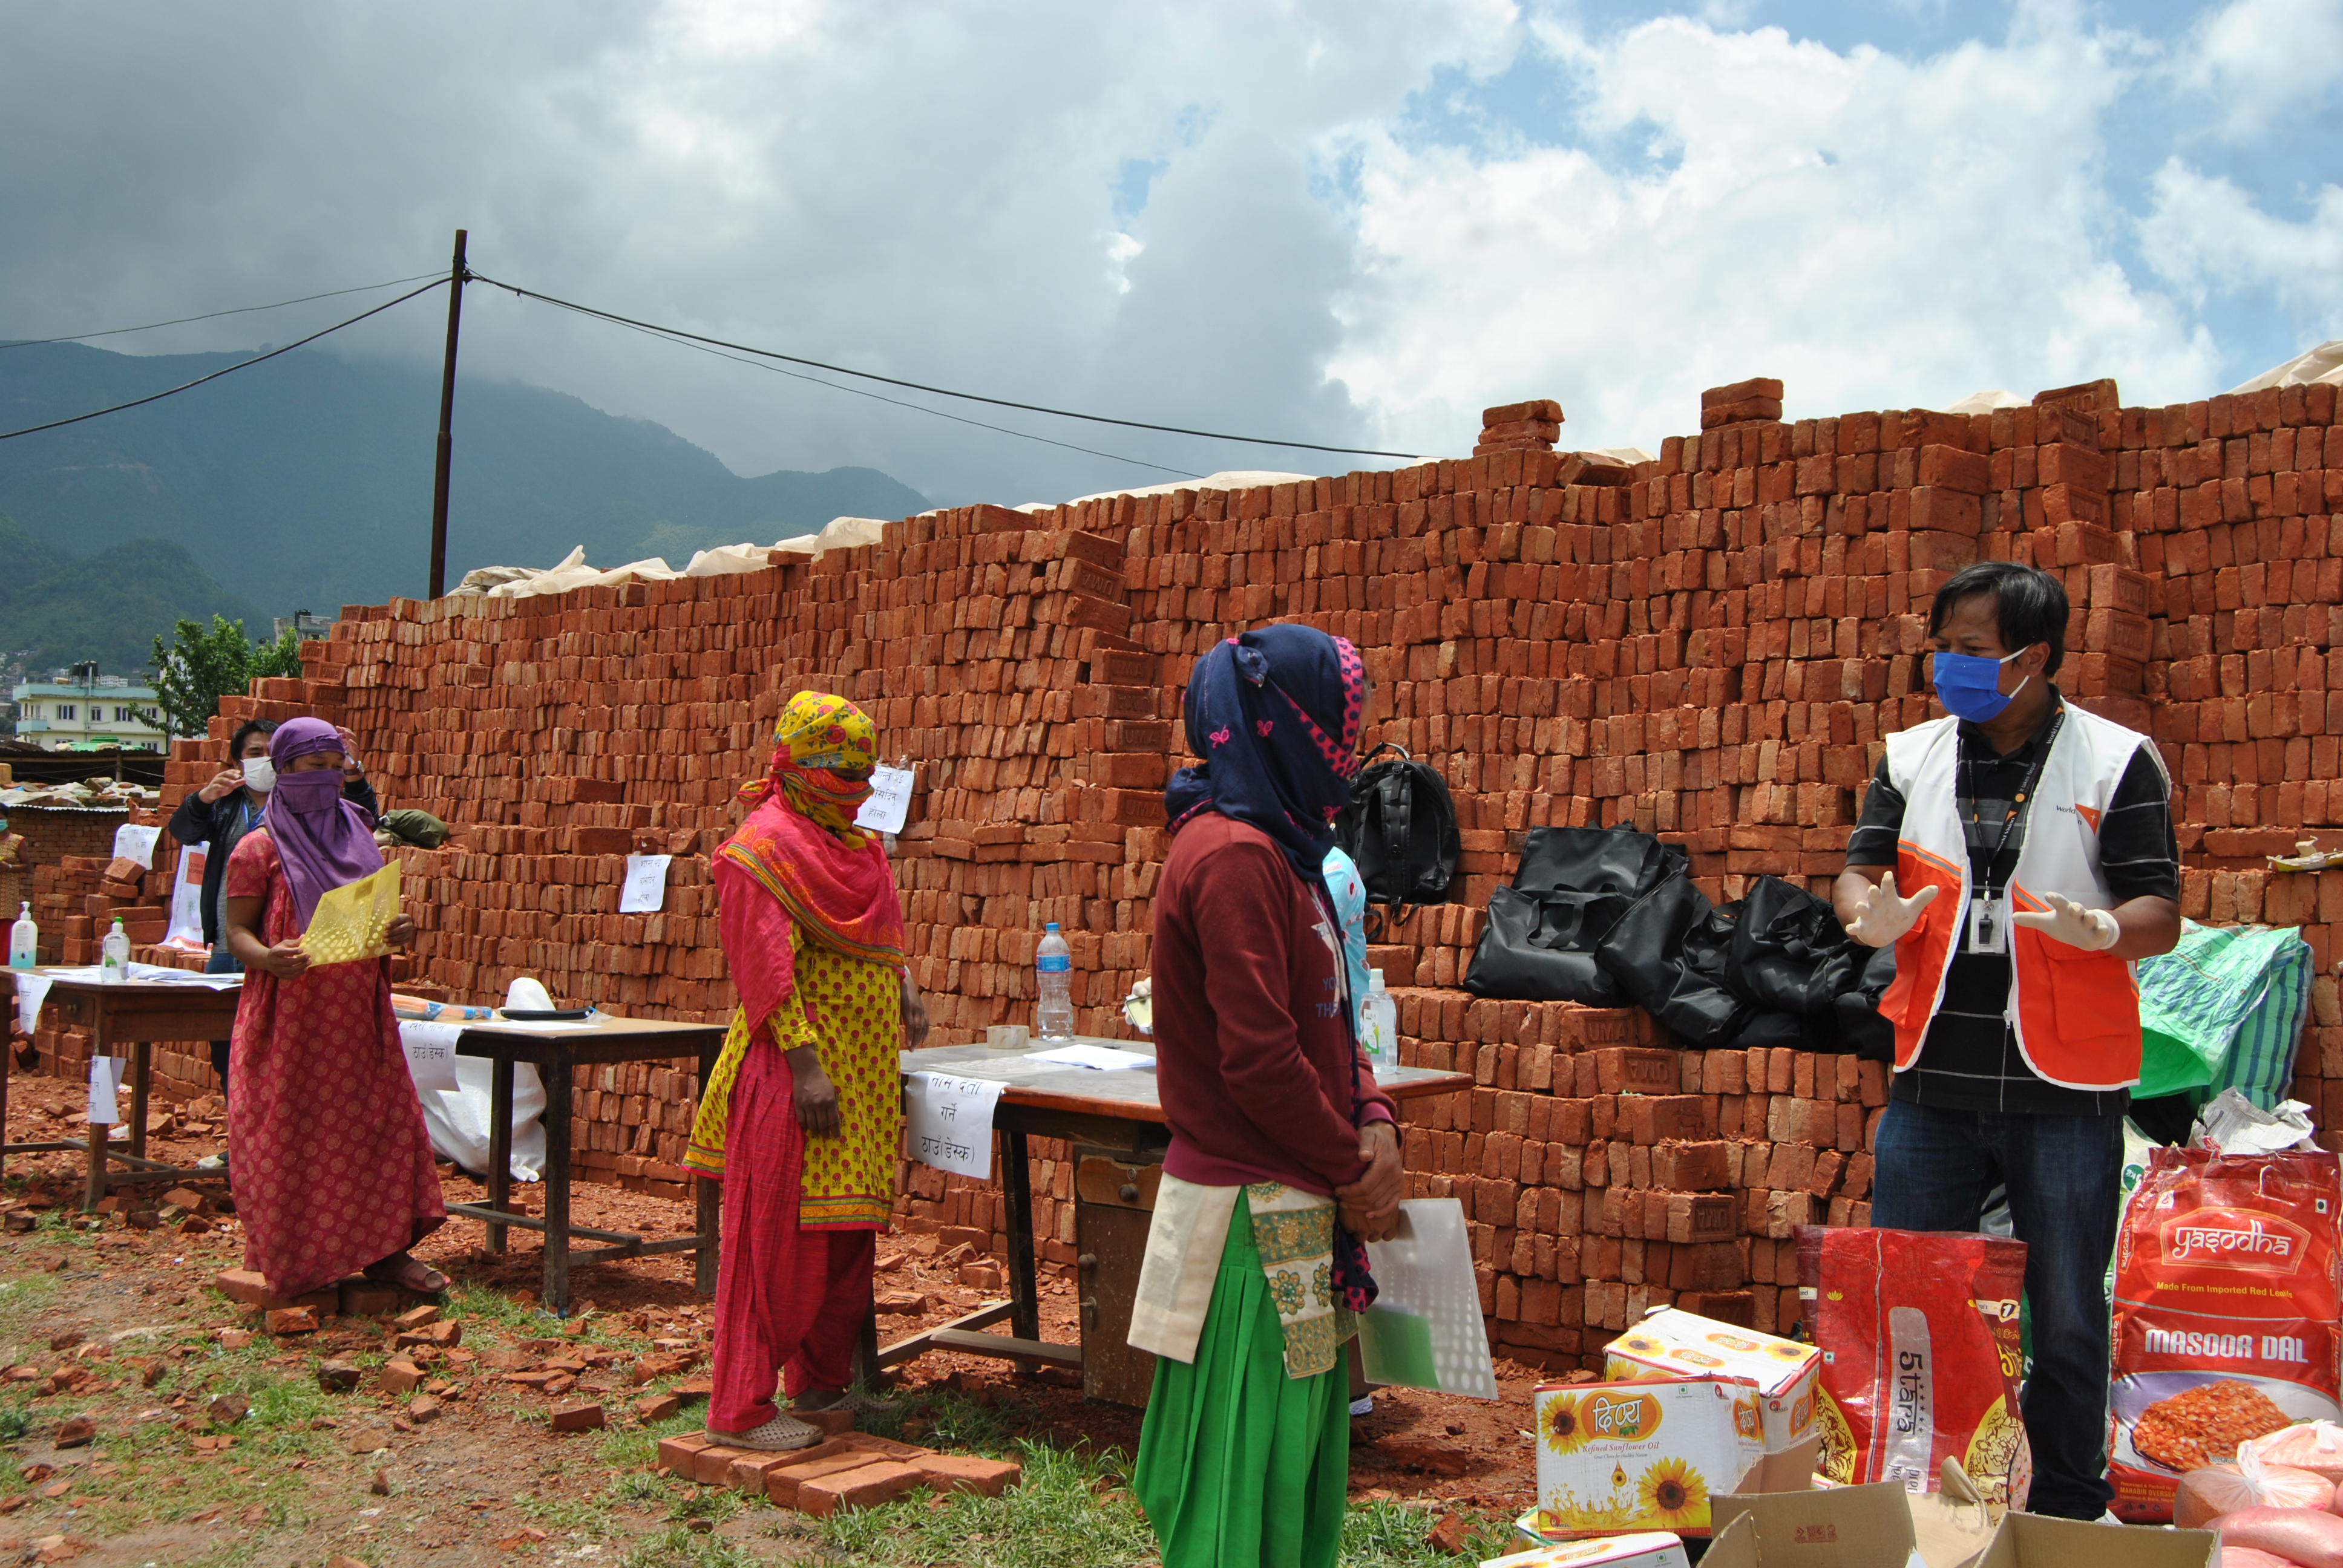 WV staff Bharat facilitates the distribution process